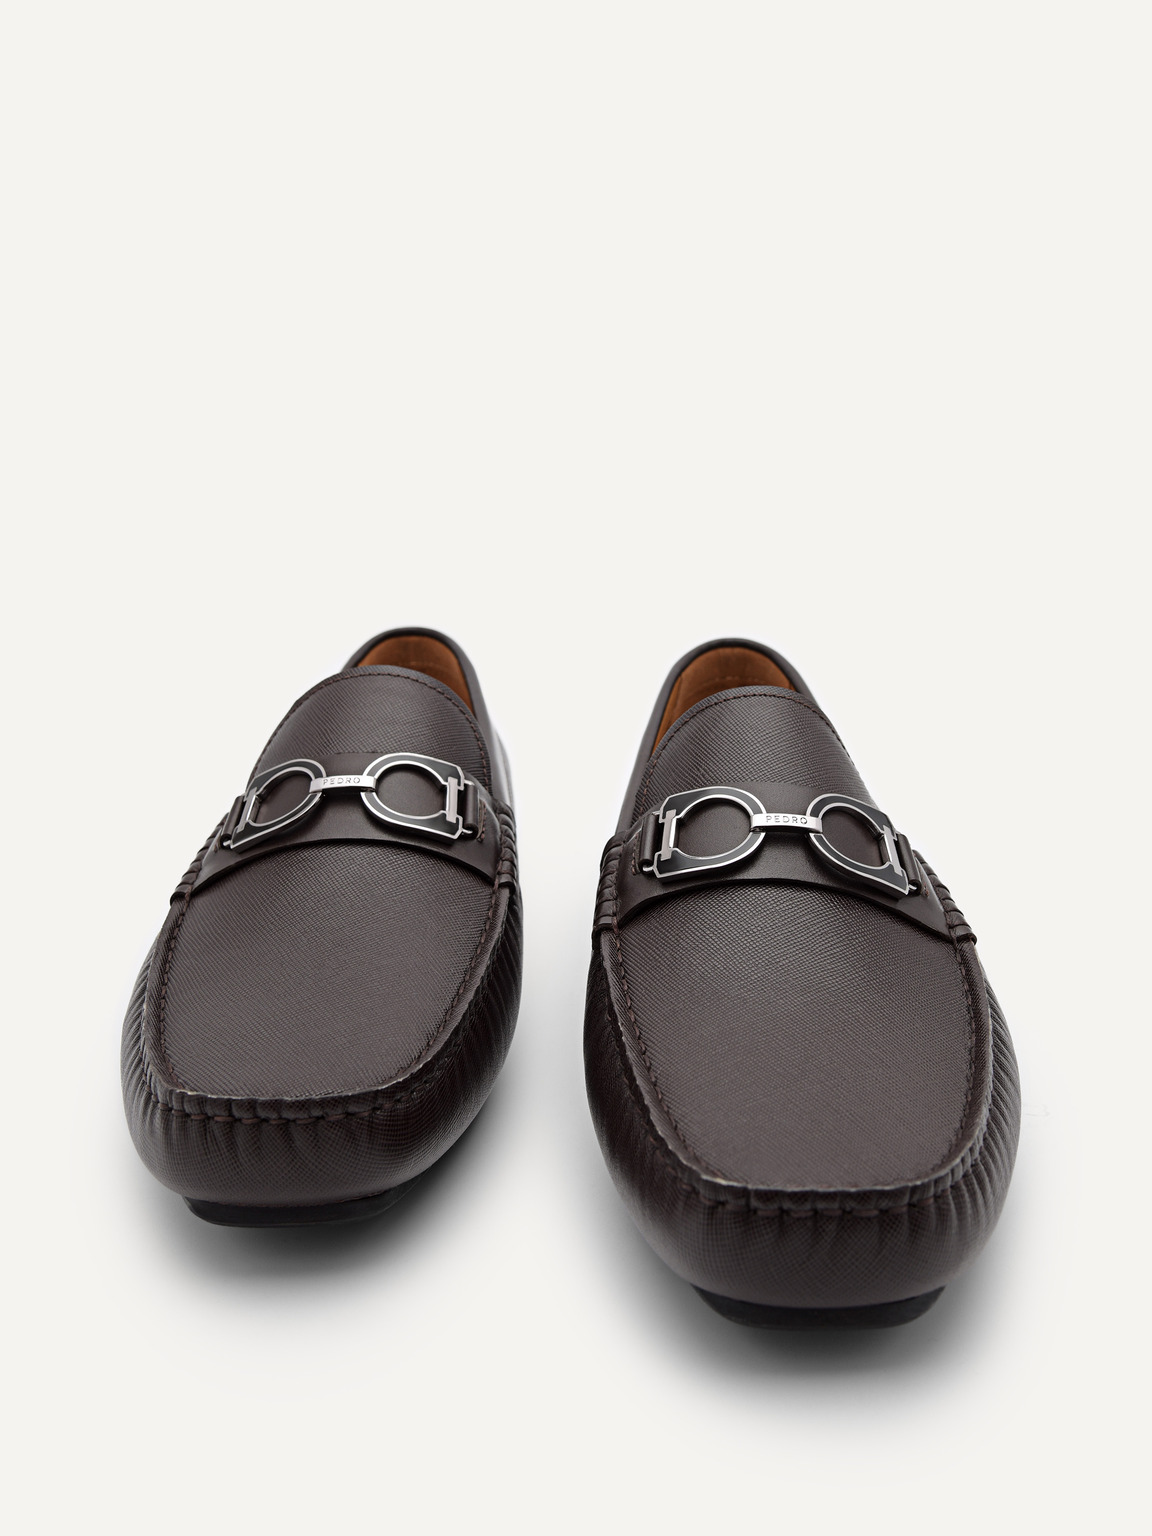 Antonio Leather Driving Shoes, Dark Brown